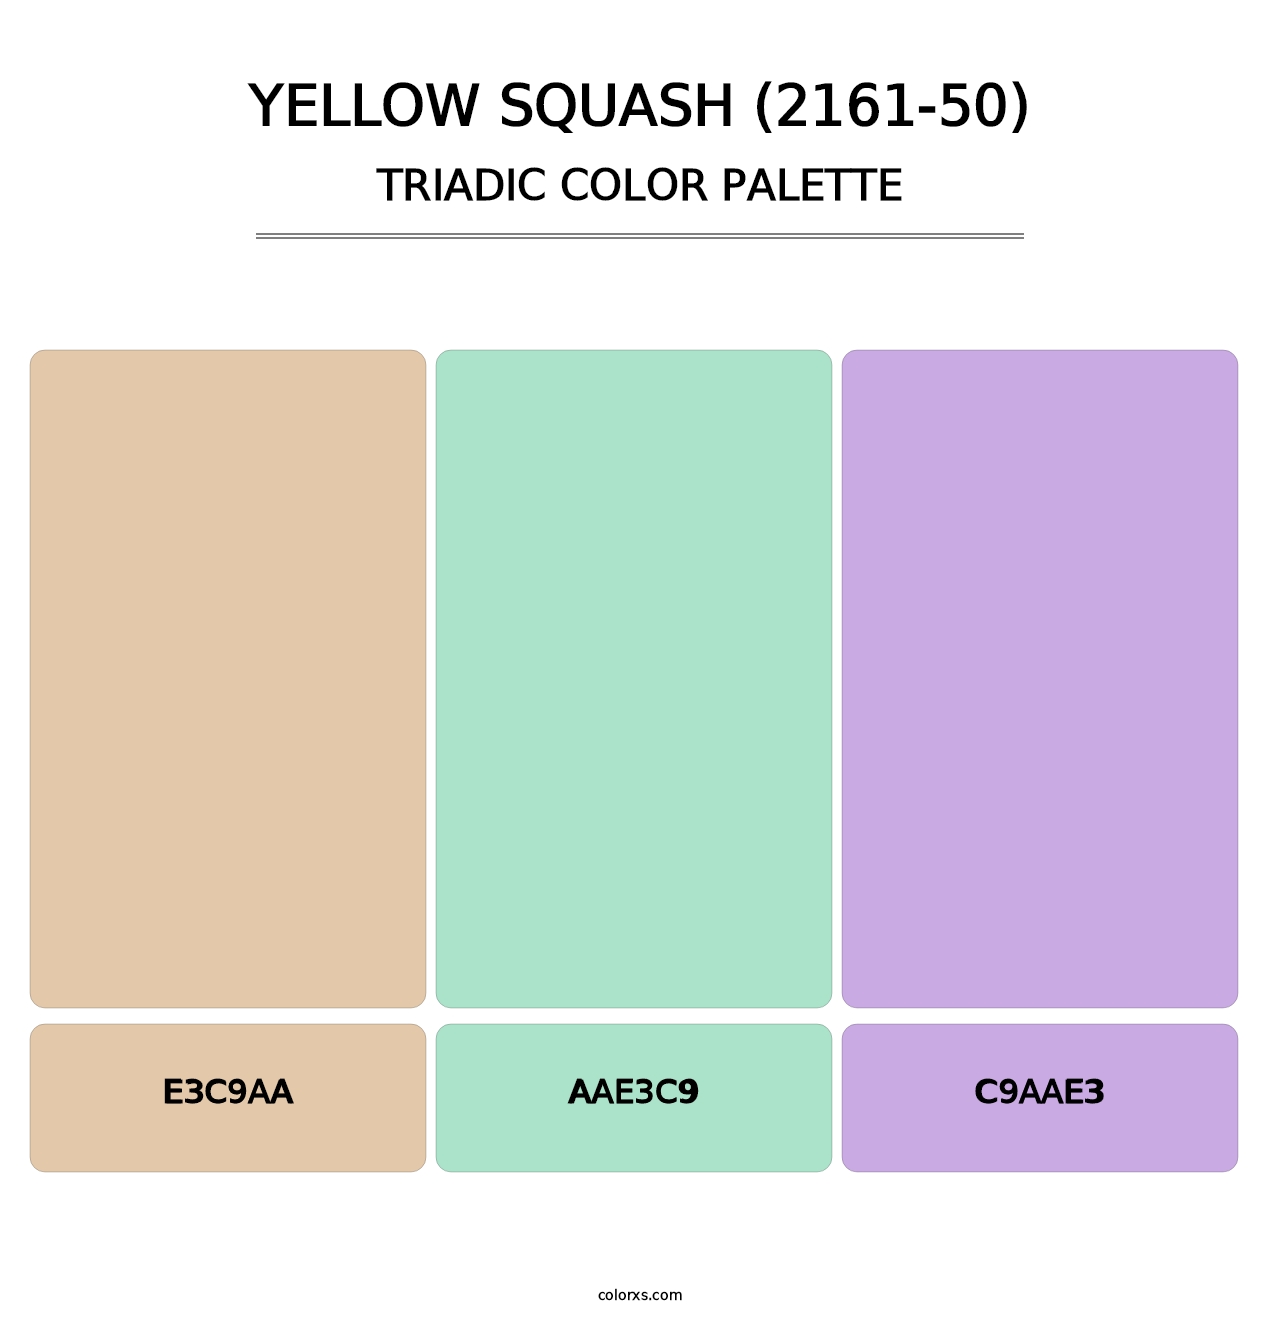 Yellow Squash (2161-50) - Triadic Color Palette